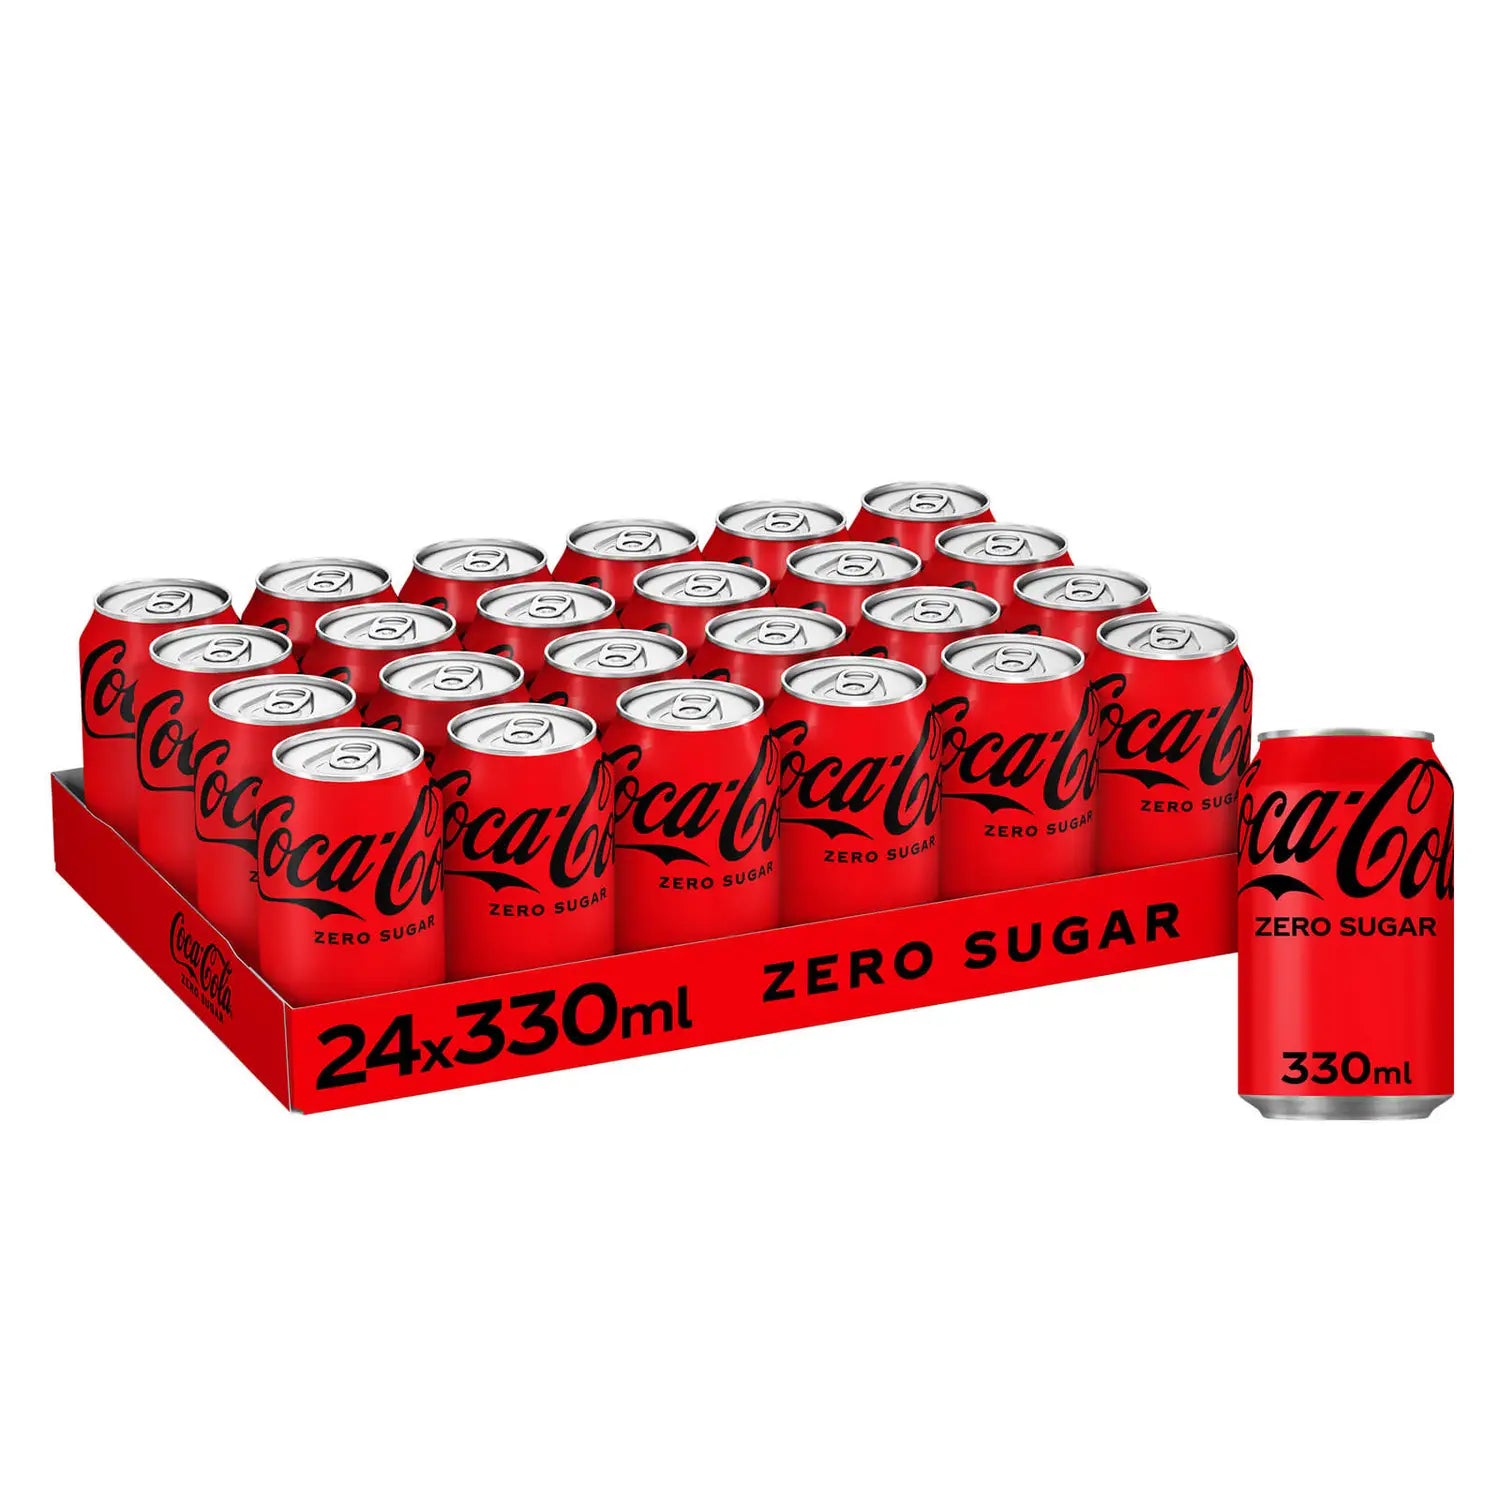 Coke Zero Sugar Cans (Coca Cola) 24x330ml Cans - Vending Superstore